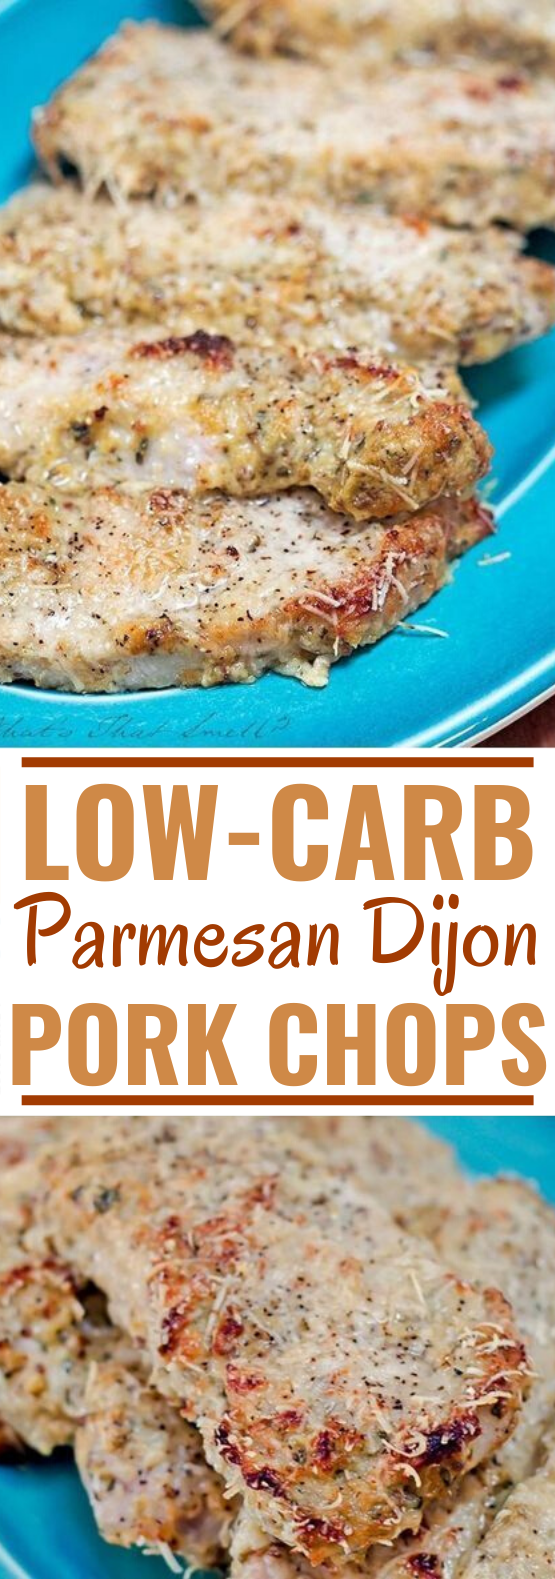 Low Carb Parmesan Dijon Pork Chops #lowcarb #dinner #keto #diet #pork